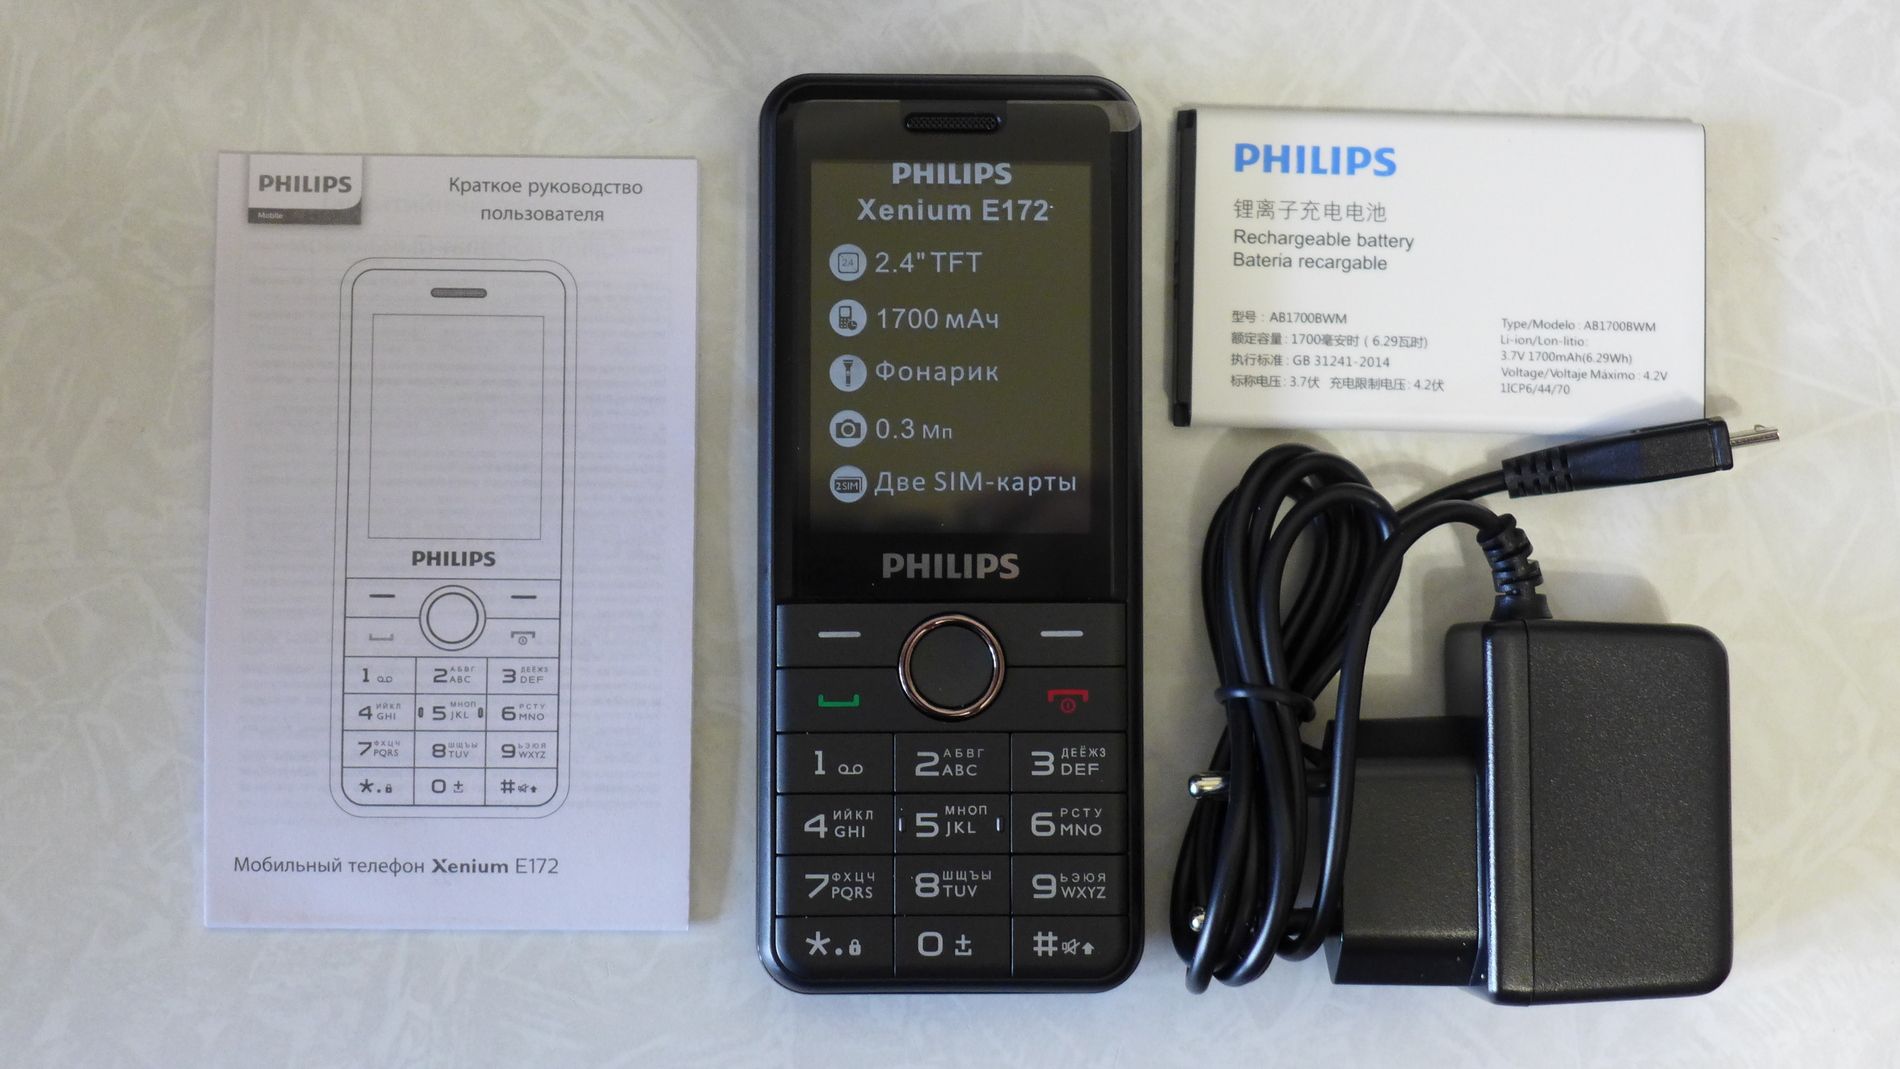 Xenium e207 купить. Philips Xenium e172 Black. Philips Xenium e172 черный. Мобильный телефон Philips Xenium e172 Black. Philips Xenium e185.